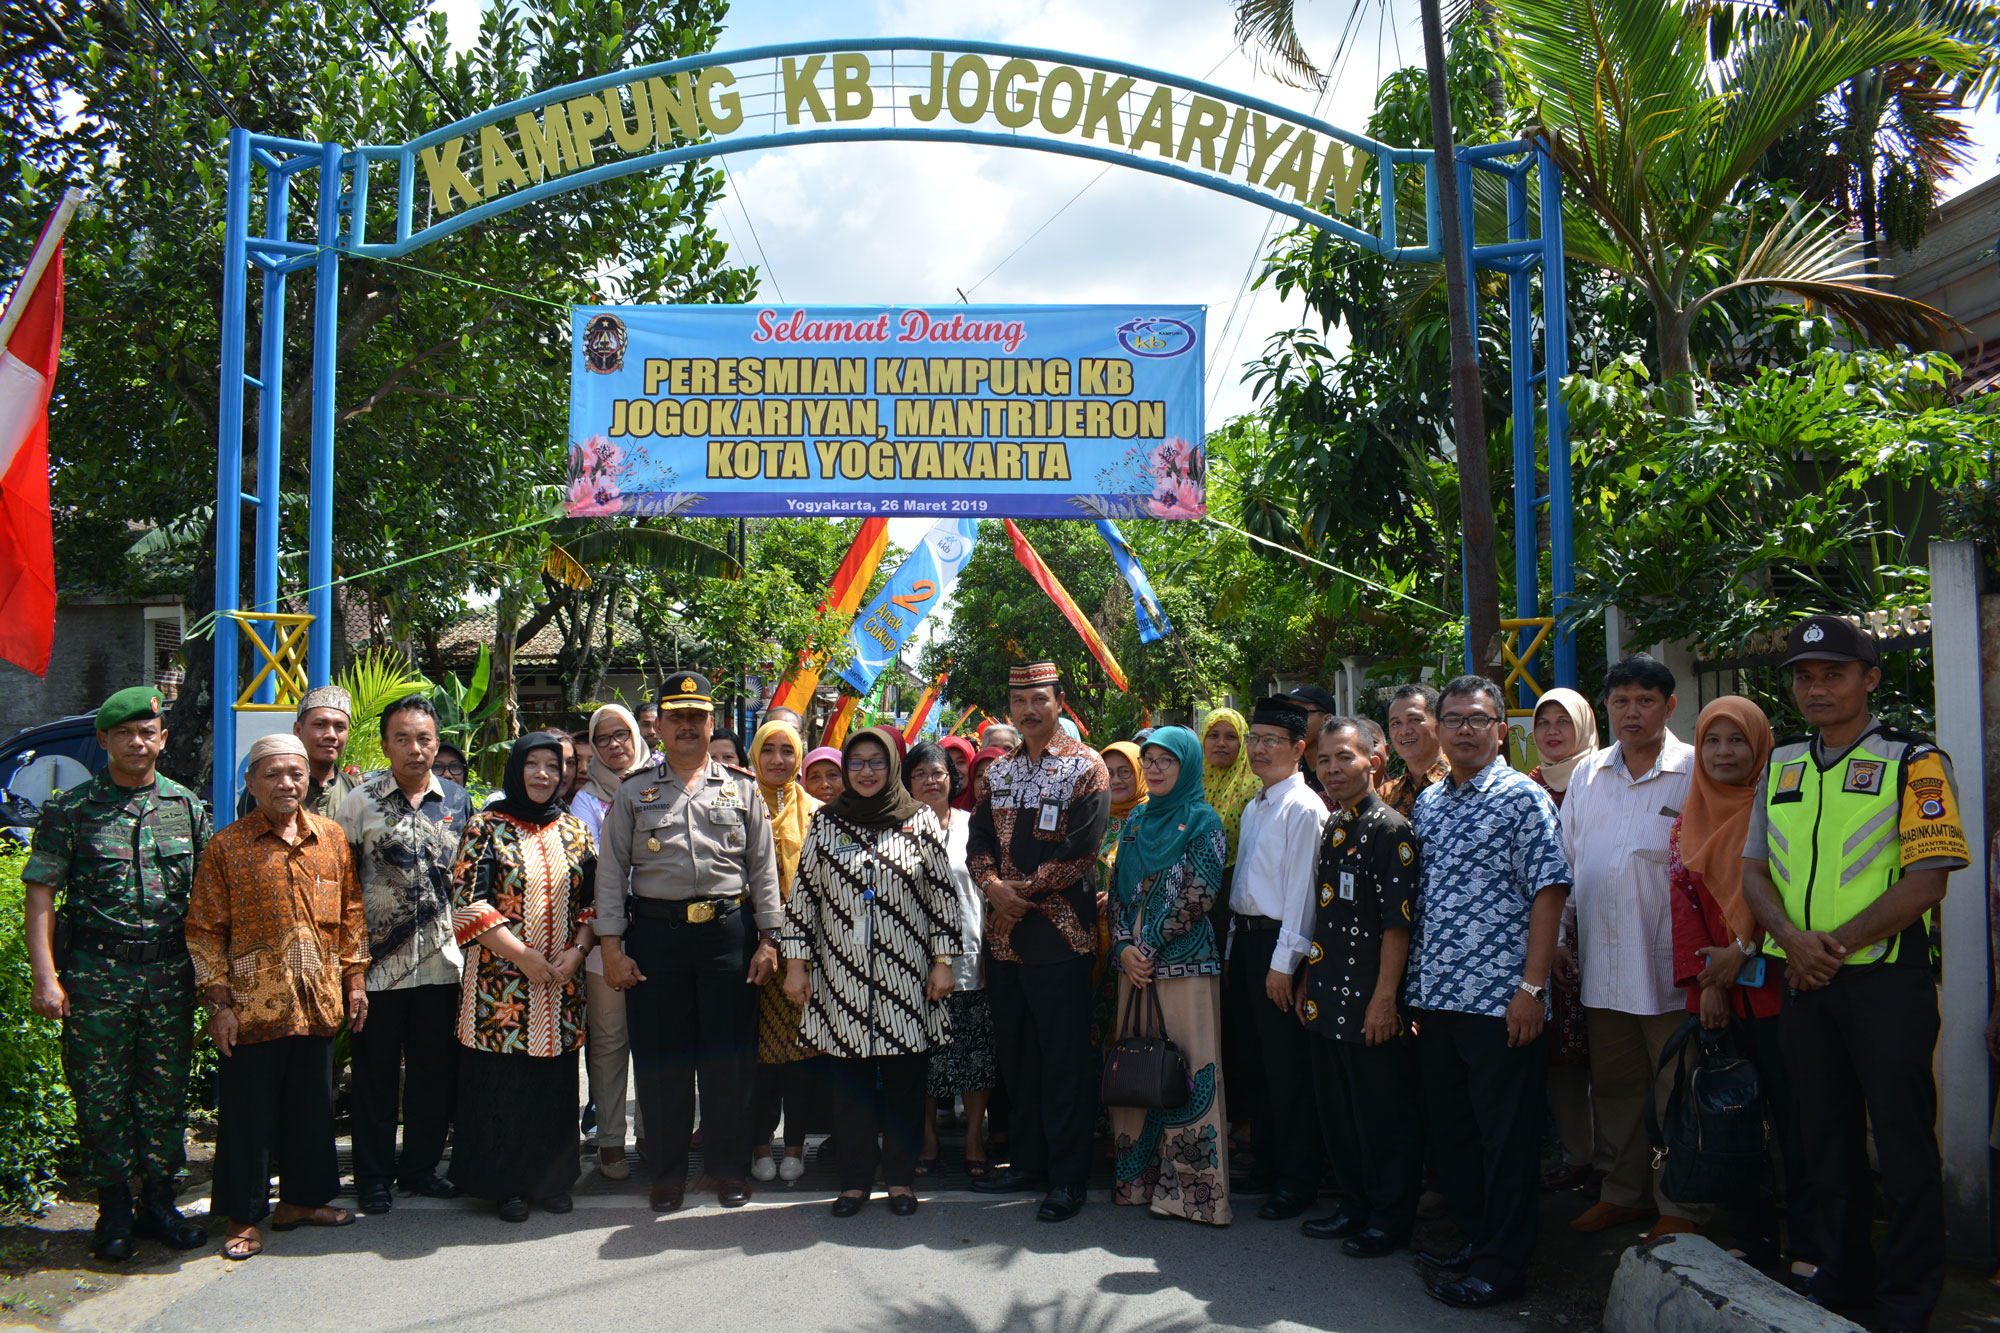 Peresmian Kampung KB Jogokaryan